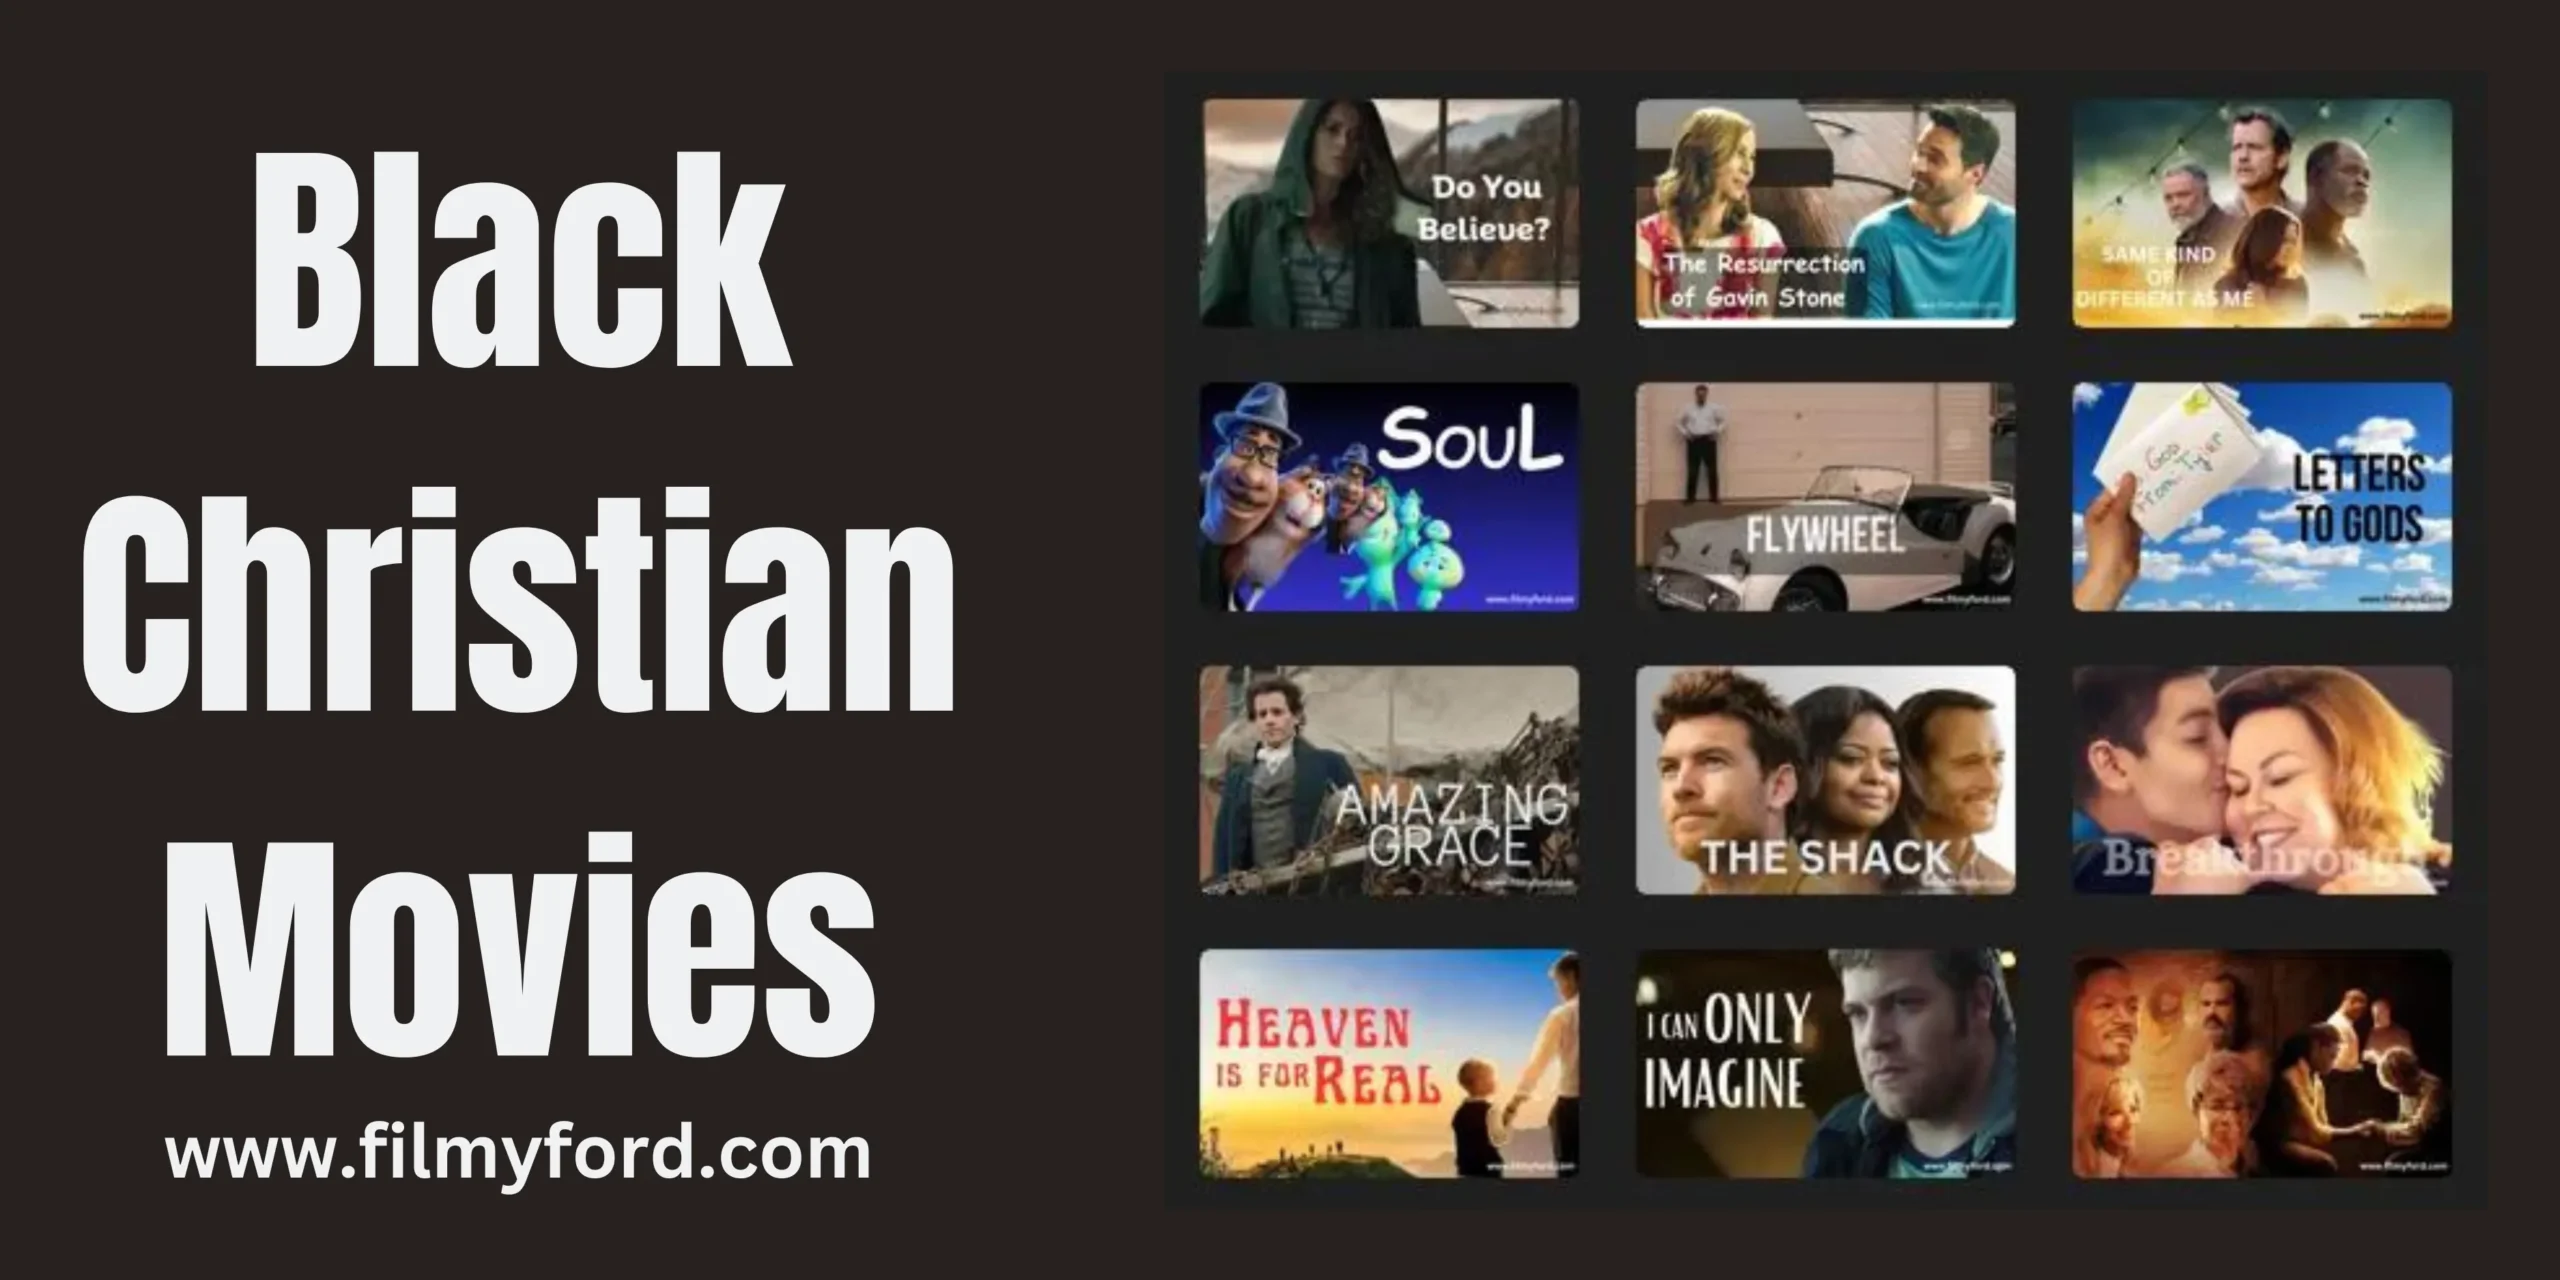 Black Christian Movies